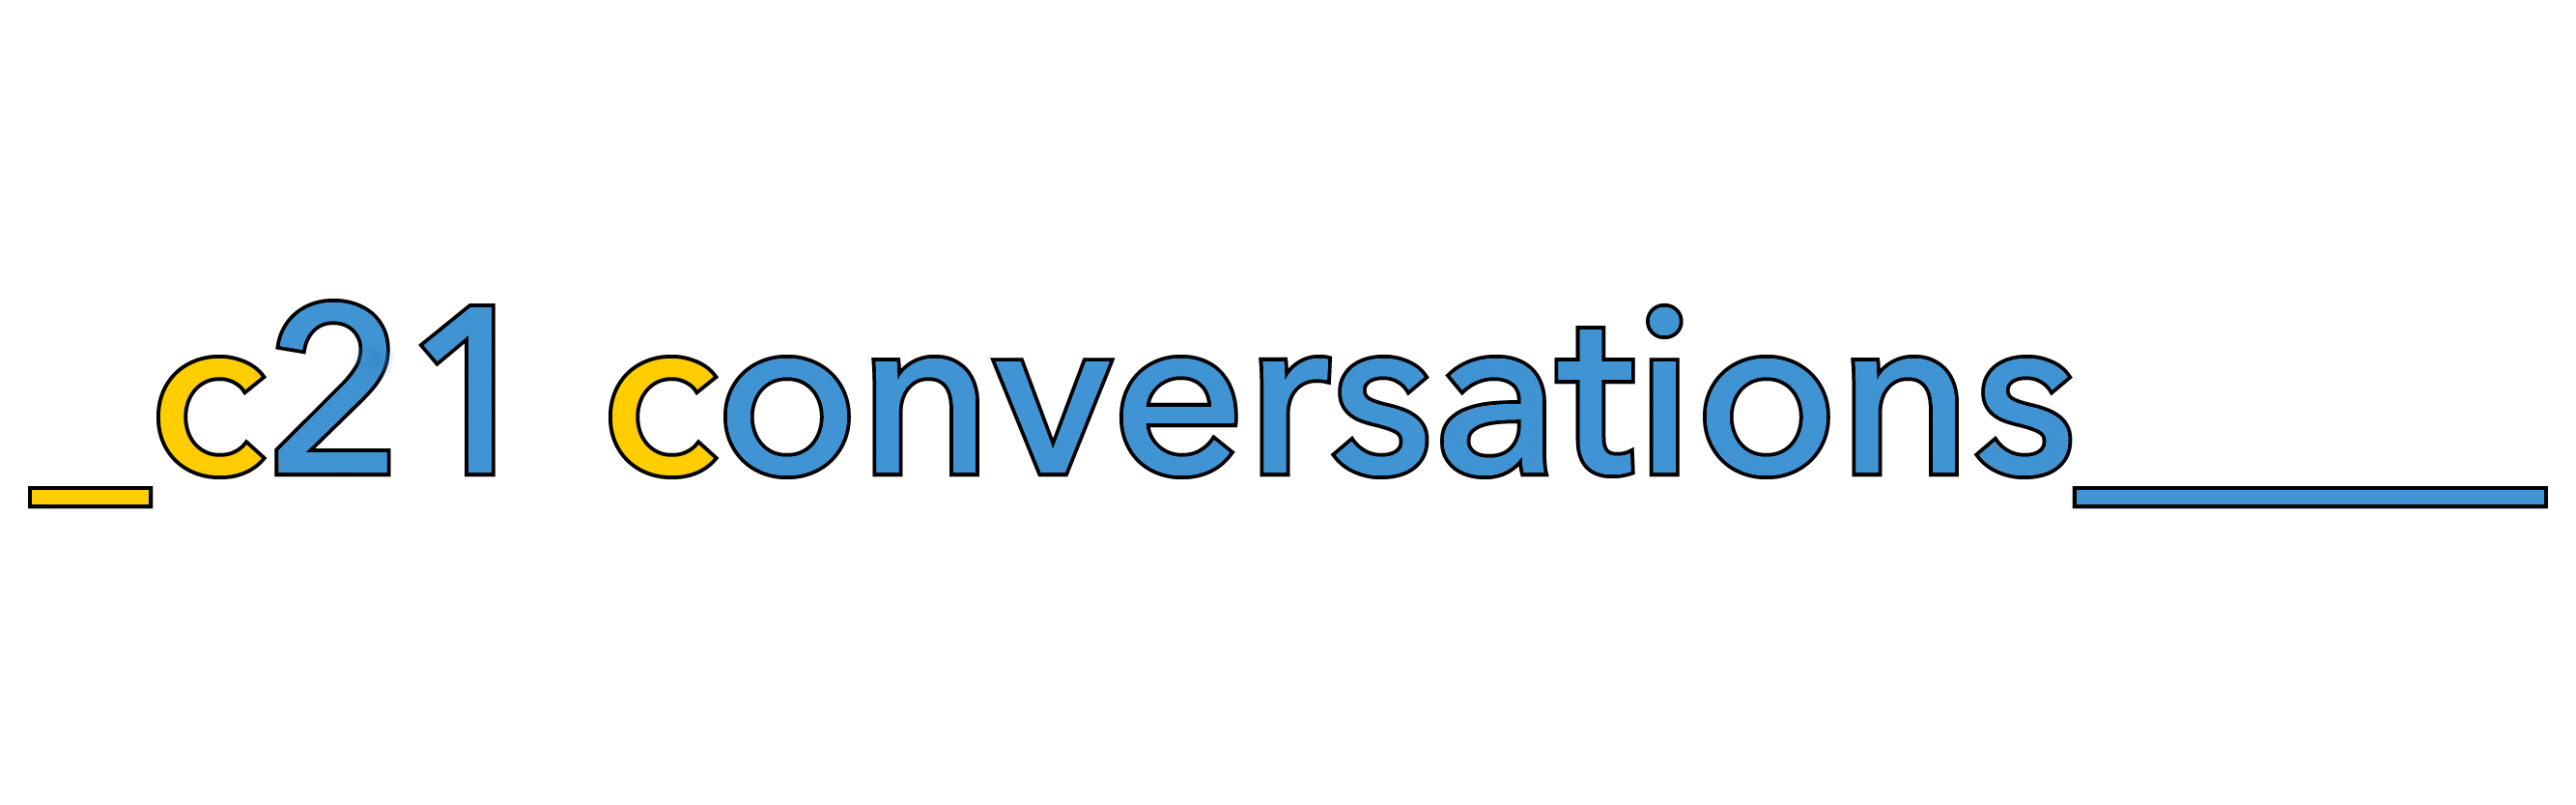 C21 Conversations logo